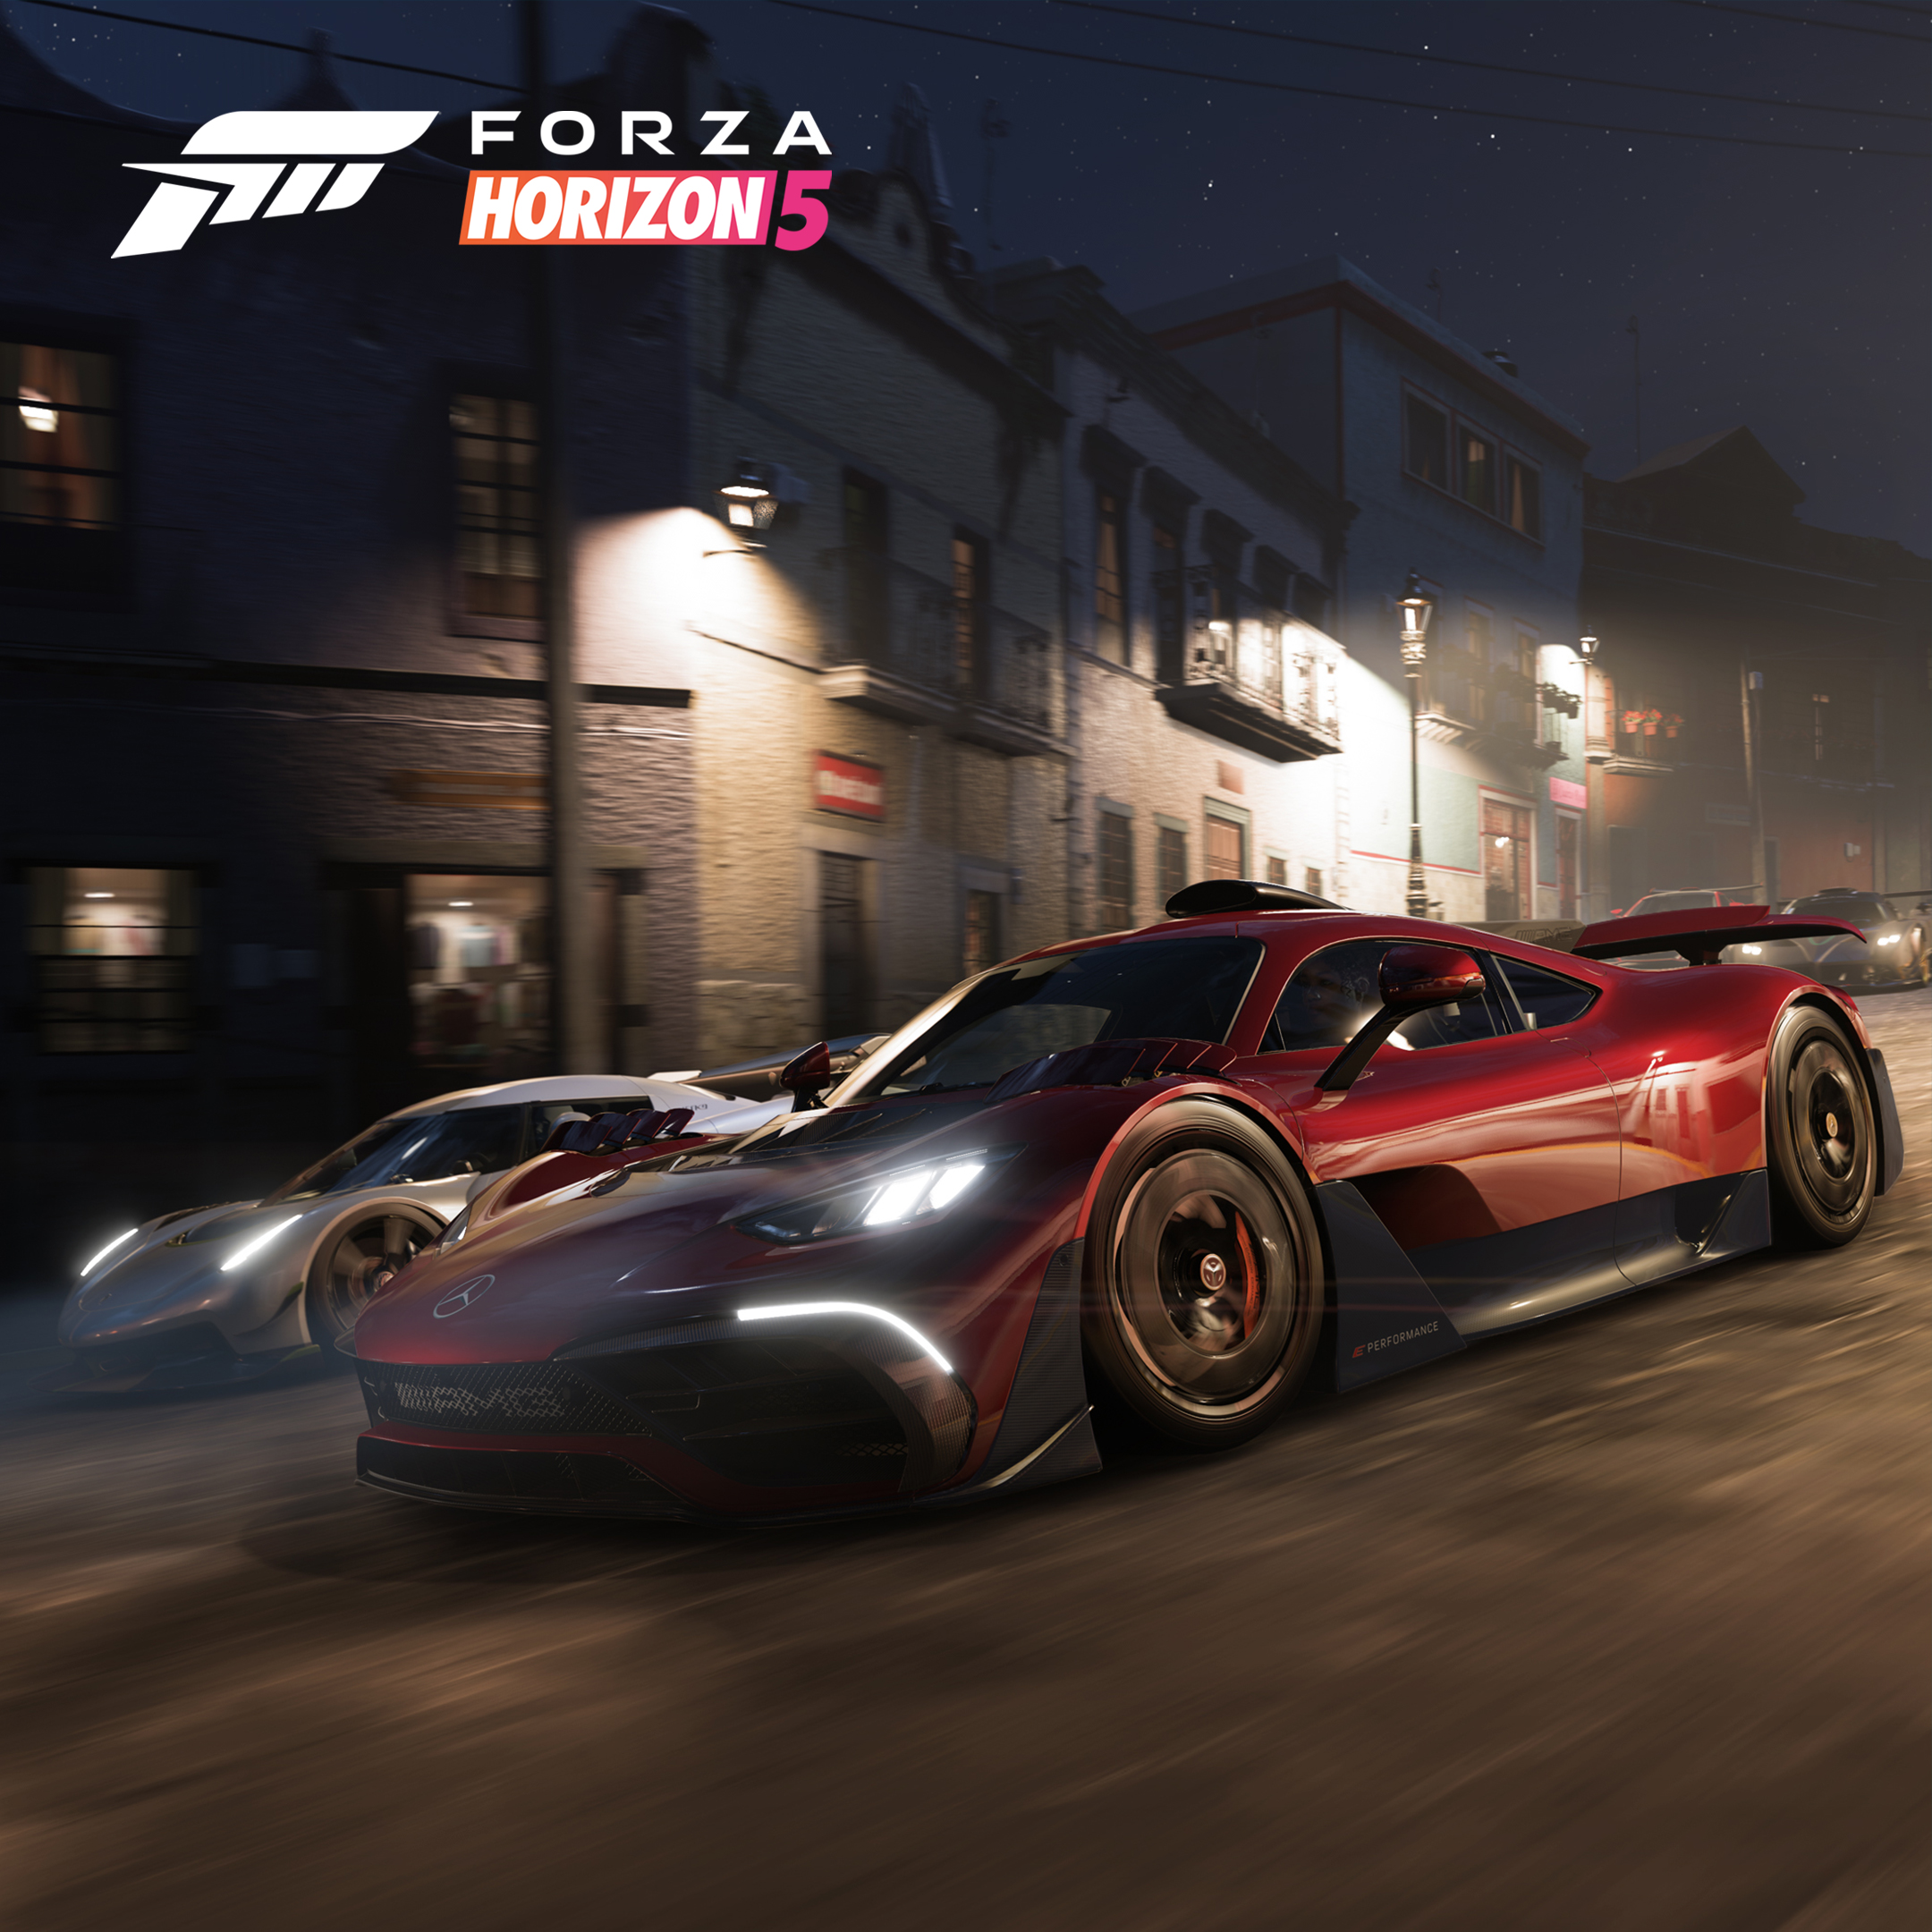 ForzaHorizon5_Gamescom-01-1x1_WM